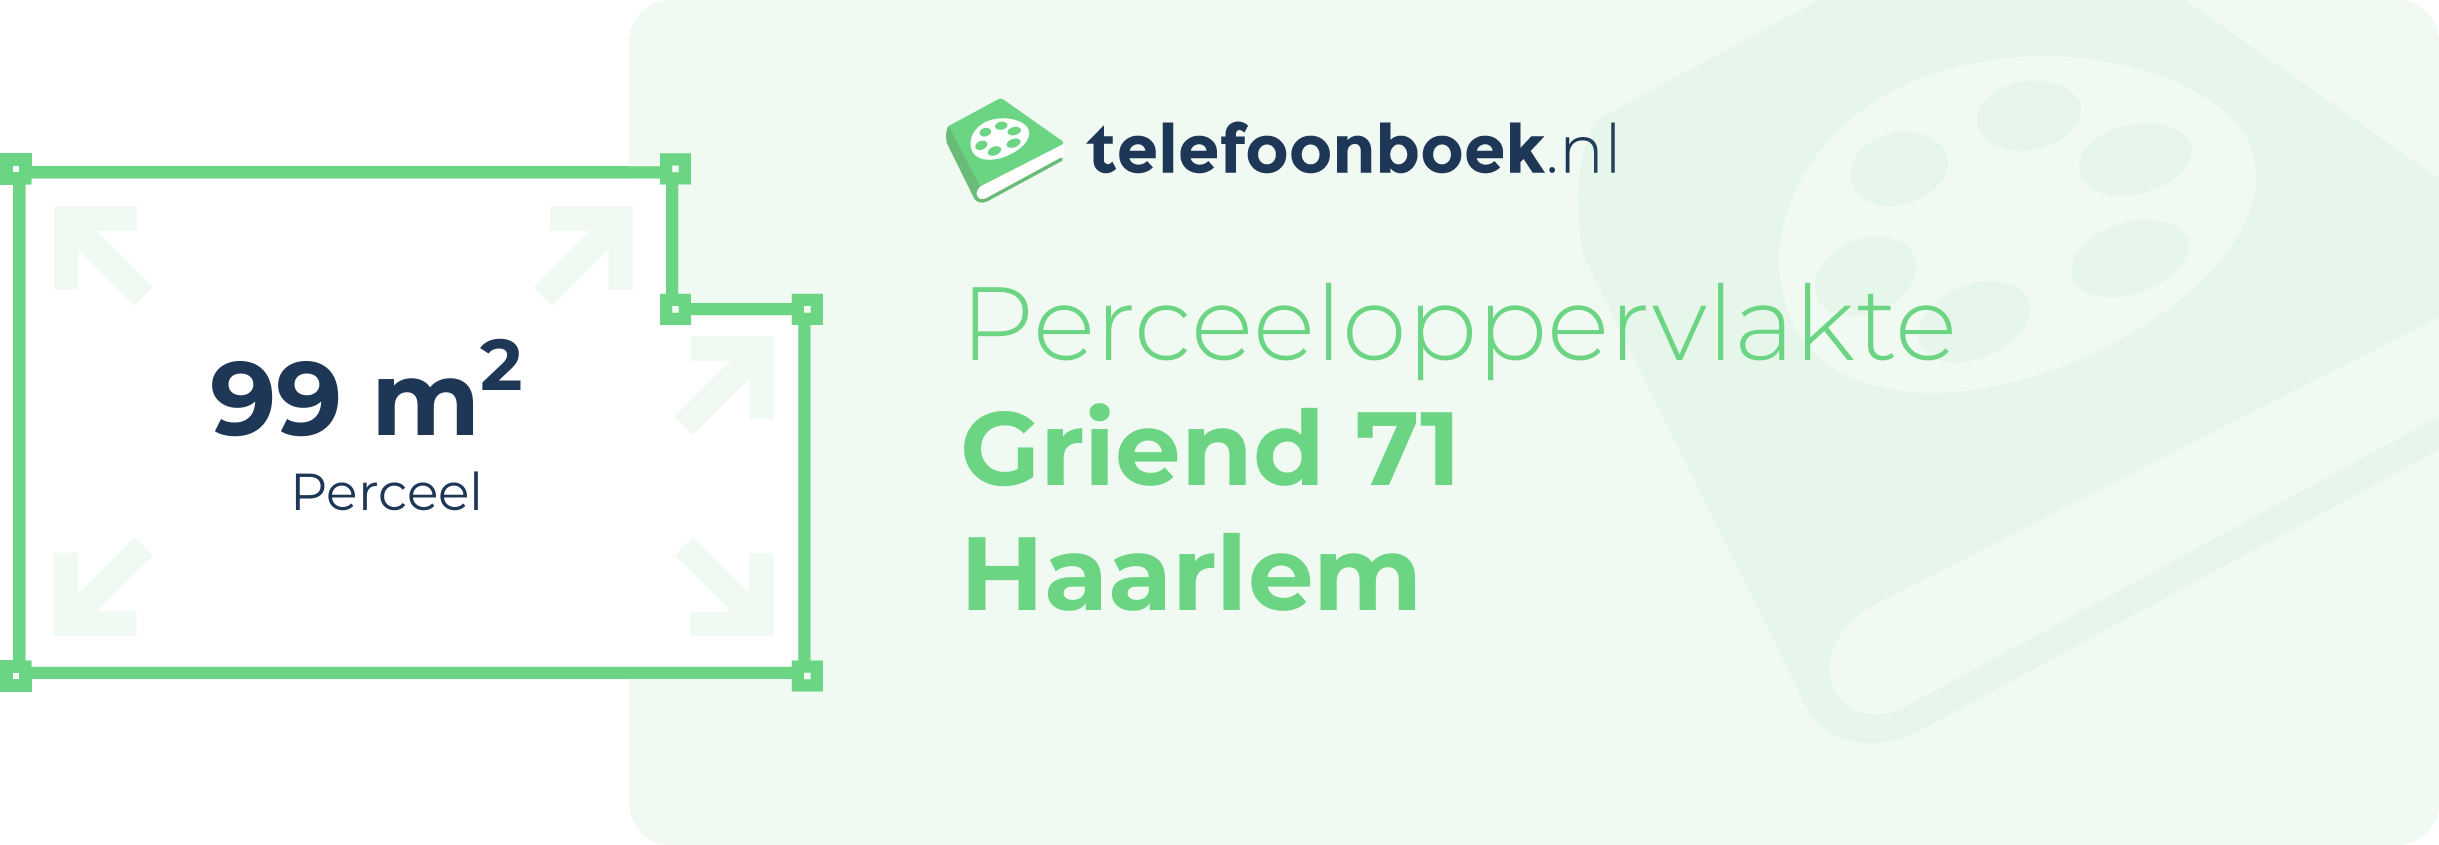 Perceeloppervlakte Griend 71 Haarlem